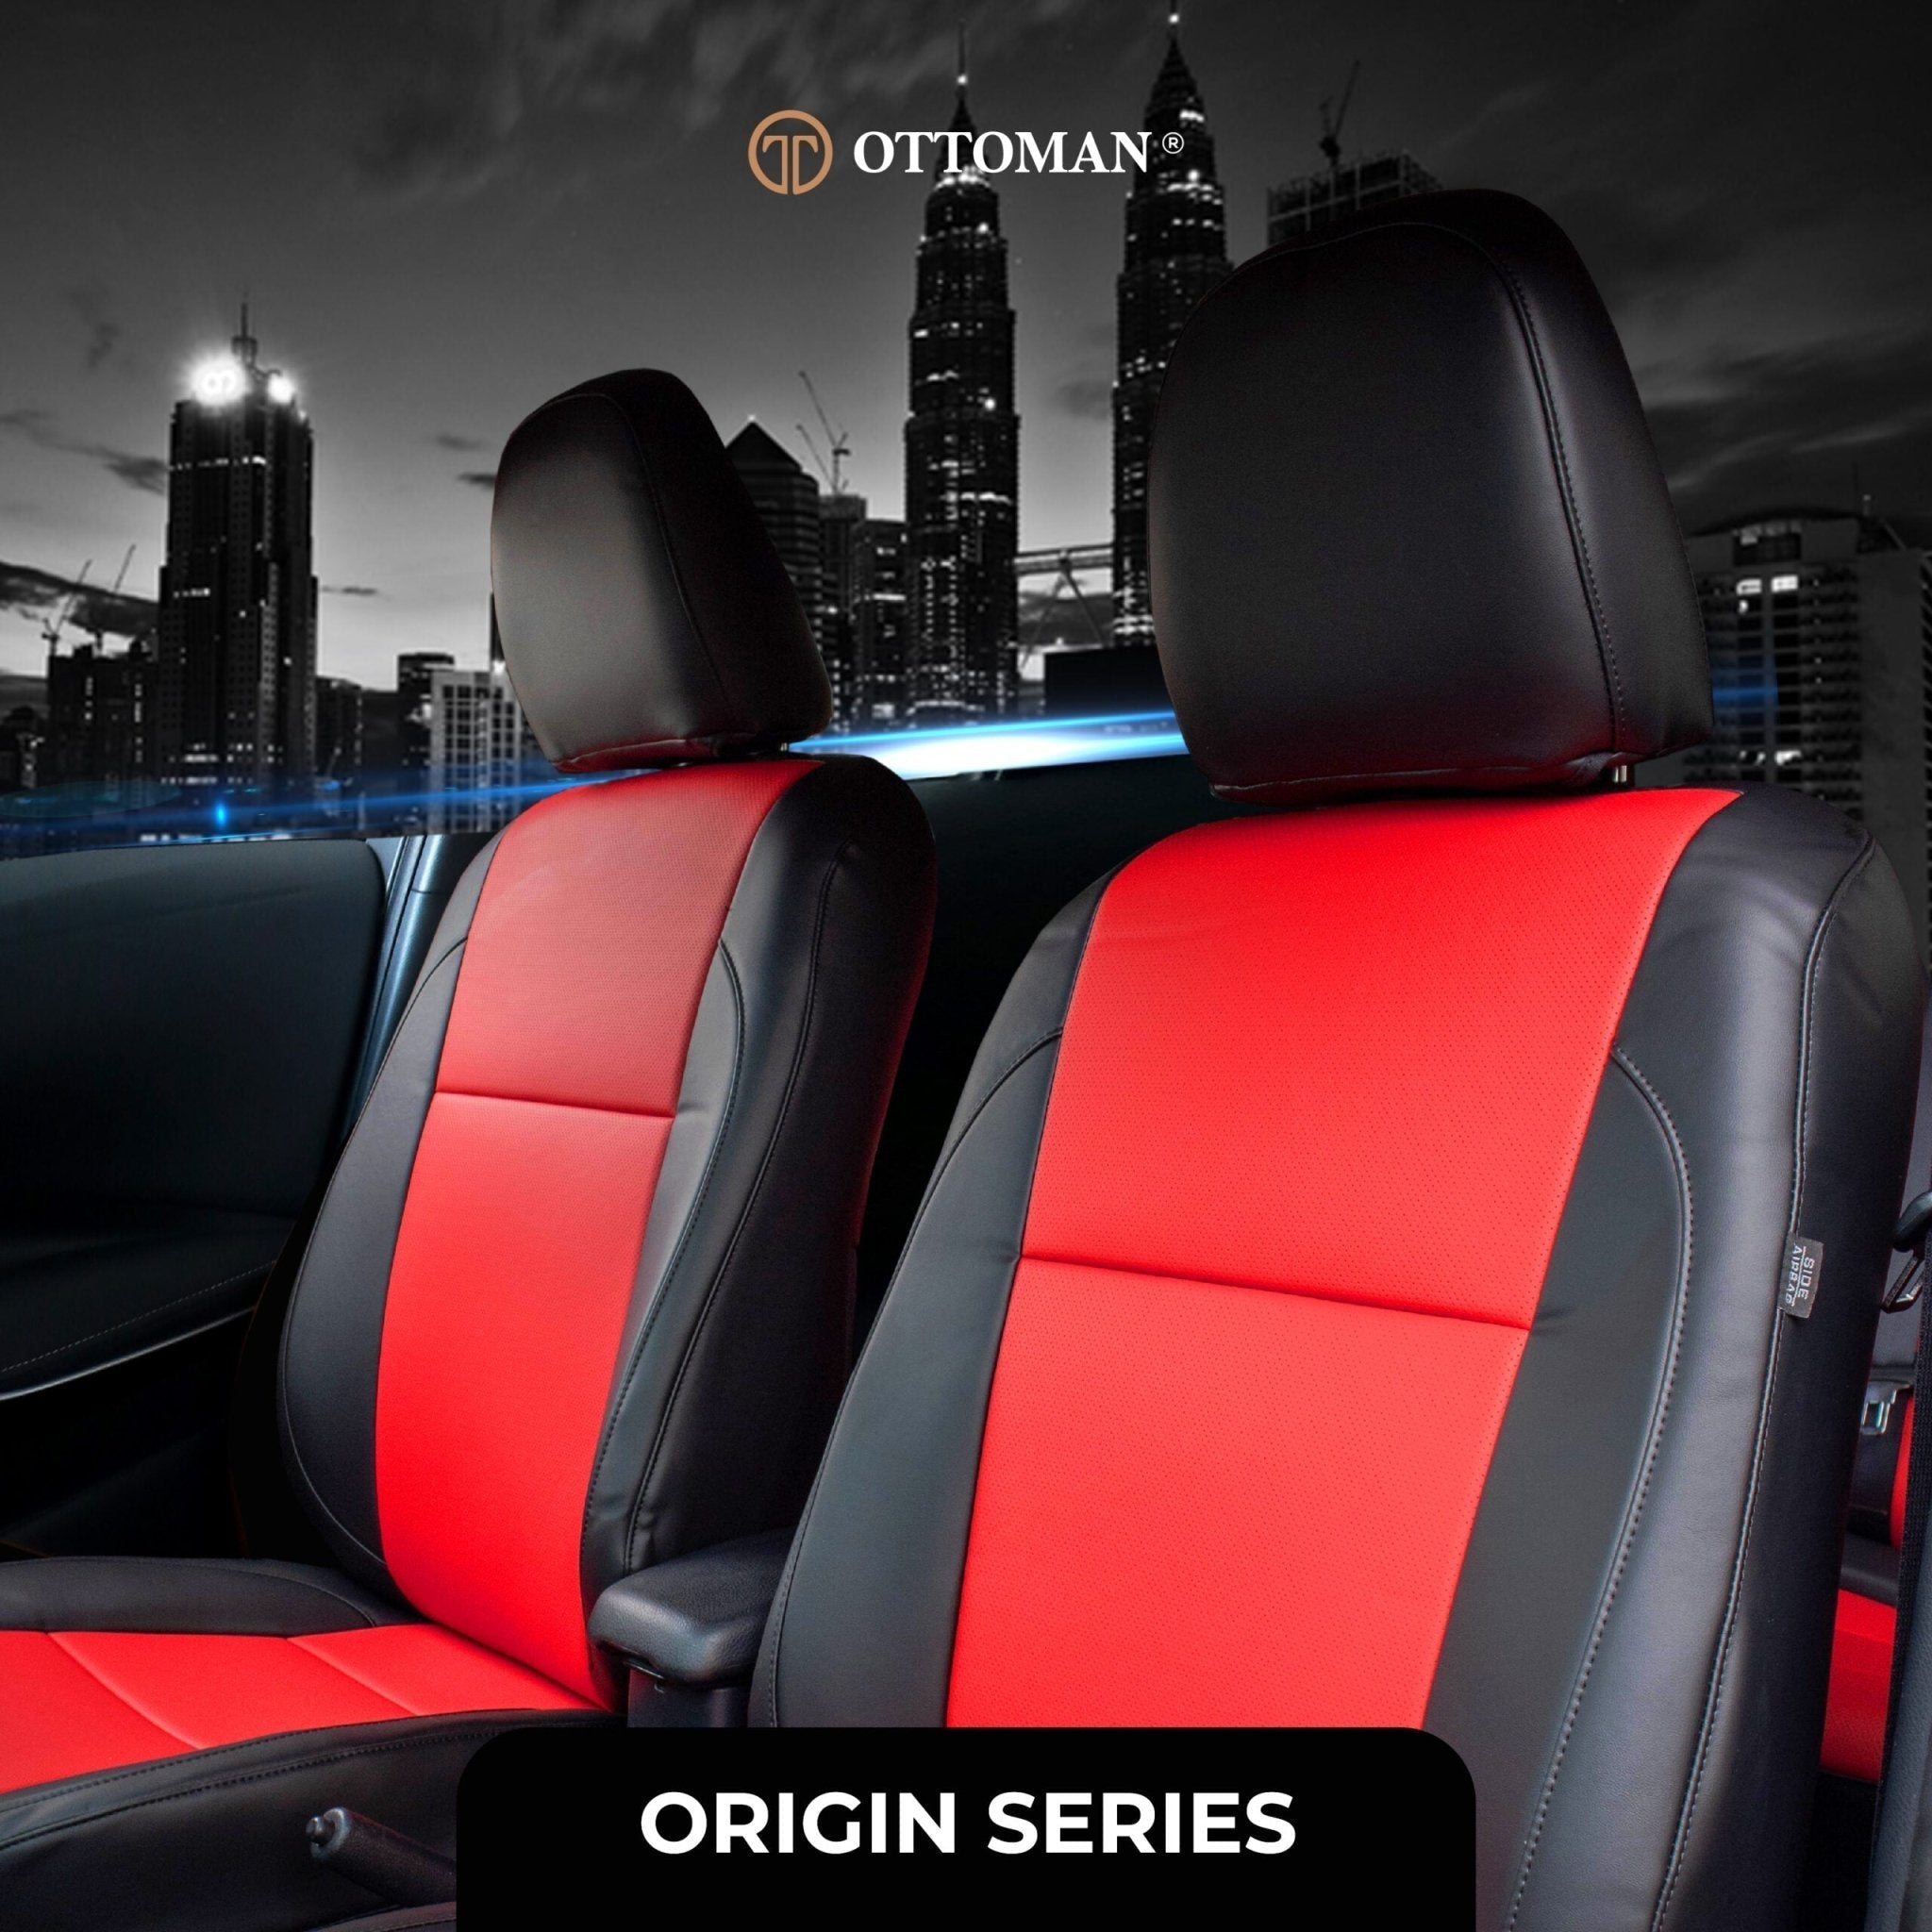 Hyundai Accent (2011-2018) Ottoman Seat Cover Seat Cover in Klang Selangor, Penang, Johor Bahru - Ottoman Car Mats